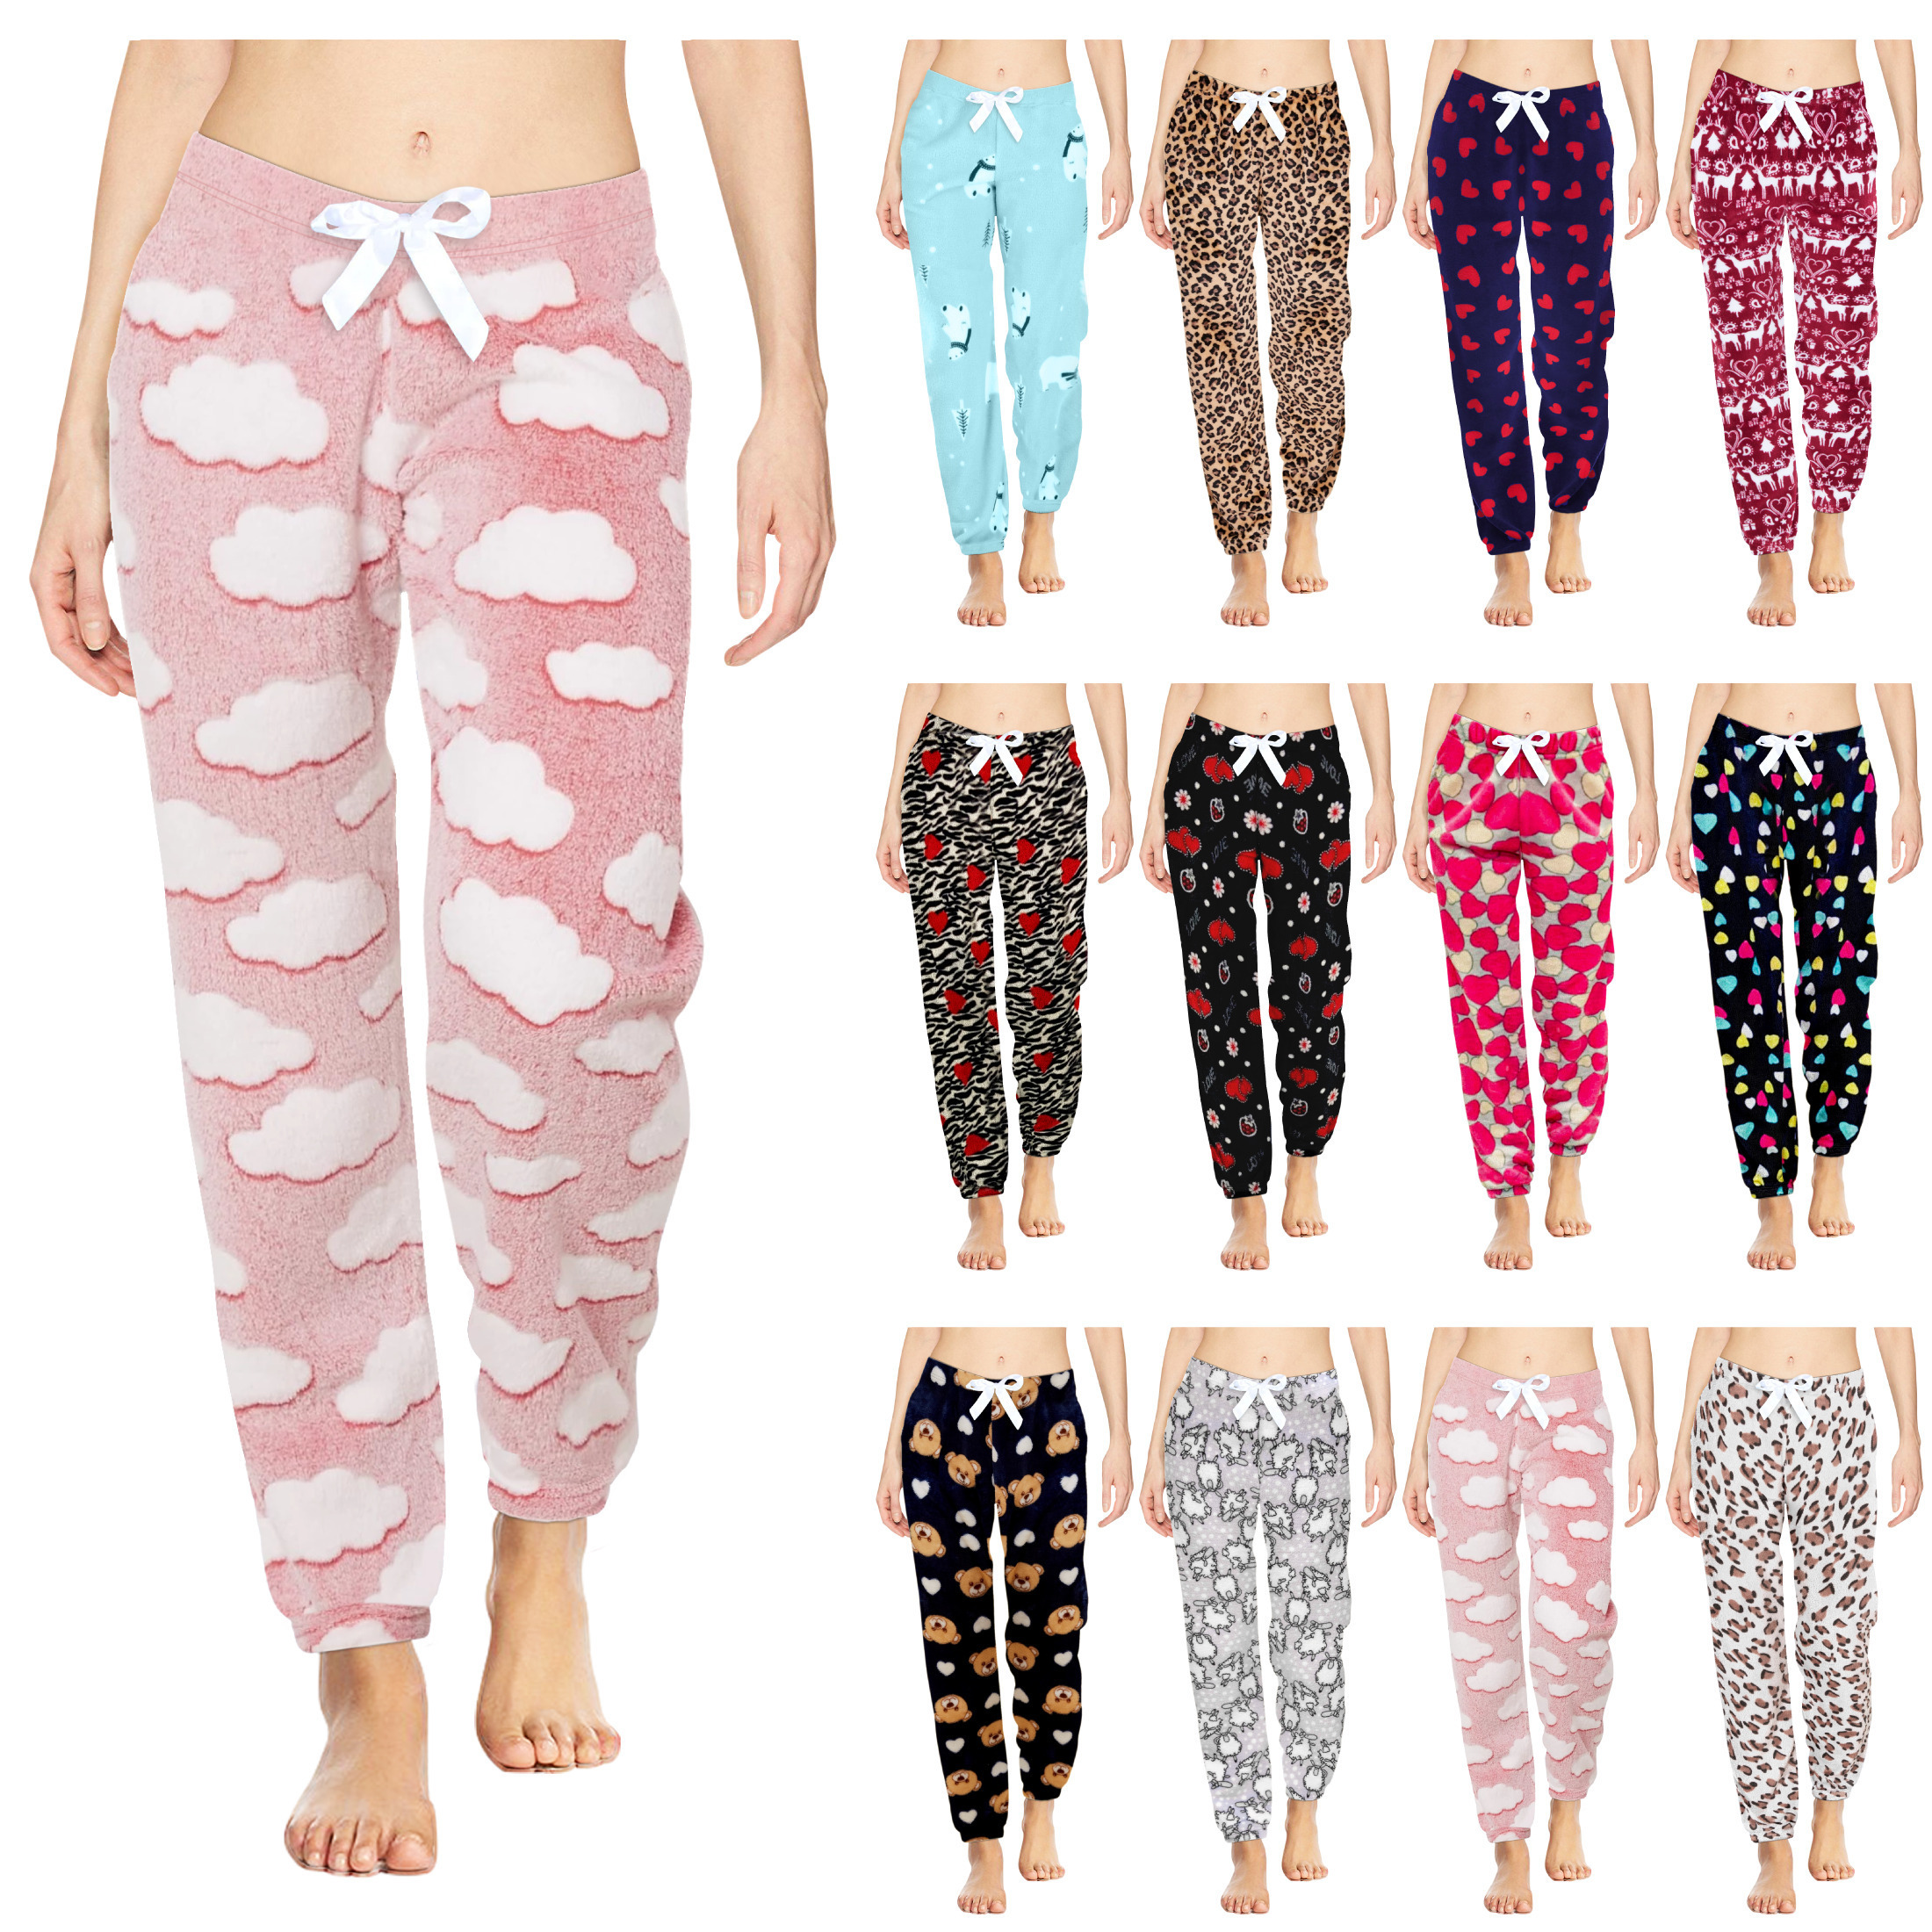 3-Pack: Women's Ultra-Plush Micro Fleece Fuzzy Pajama Pants - Print, Medium